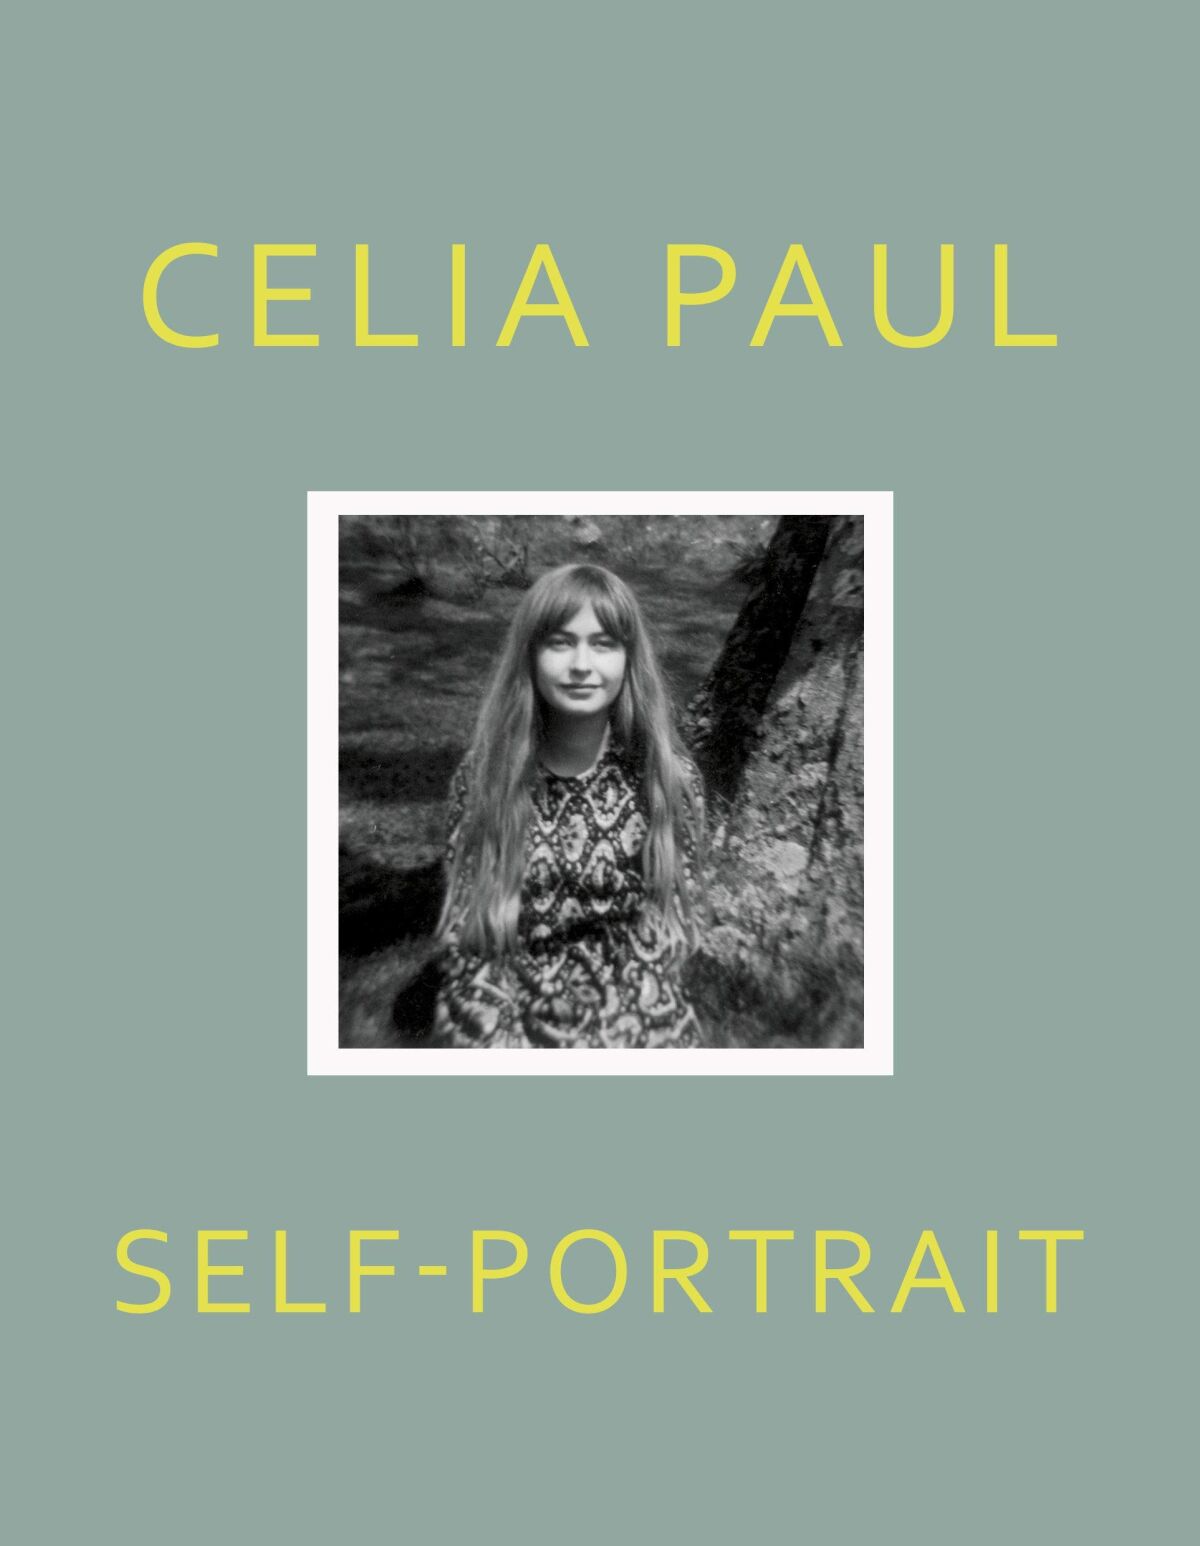 Book jacket for Celia Paul's "Self-Portrait"